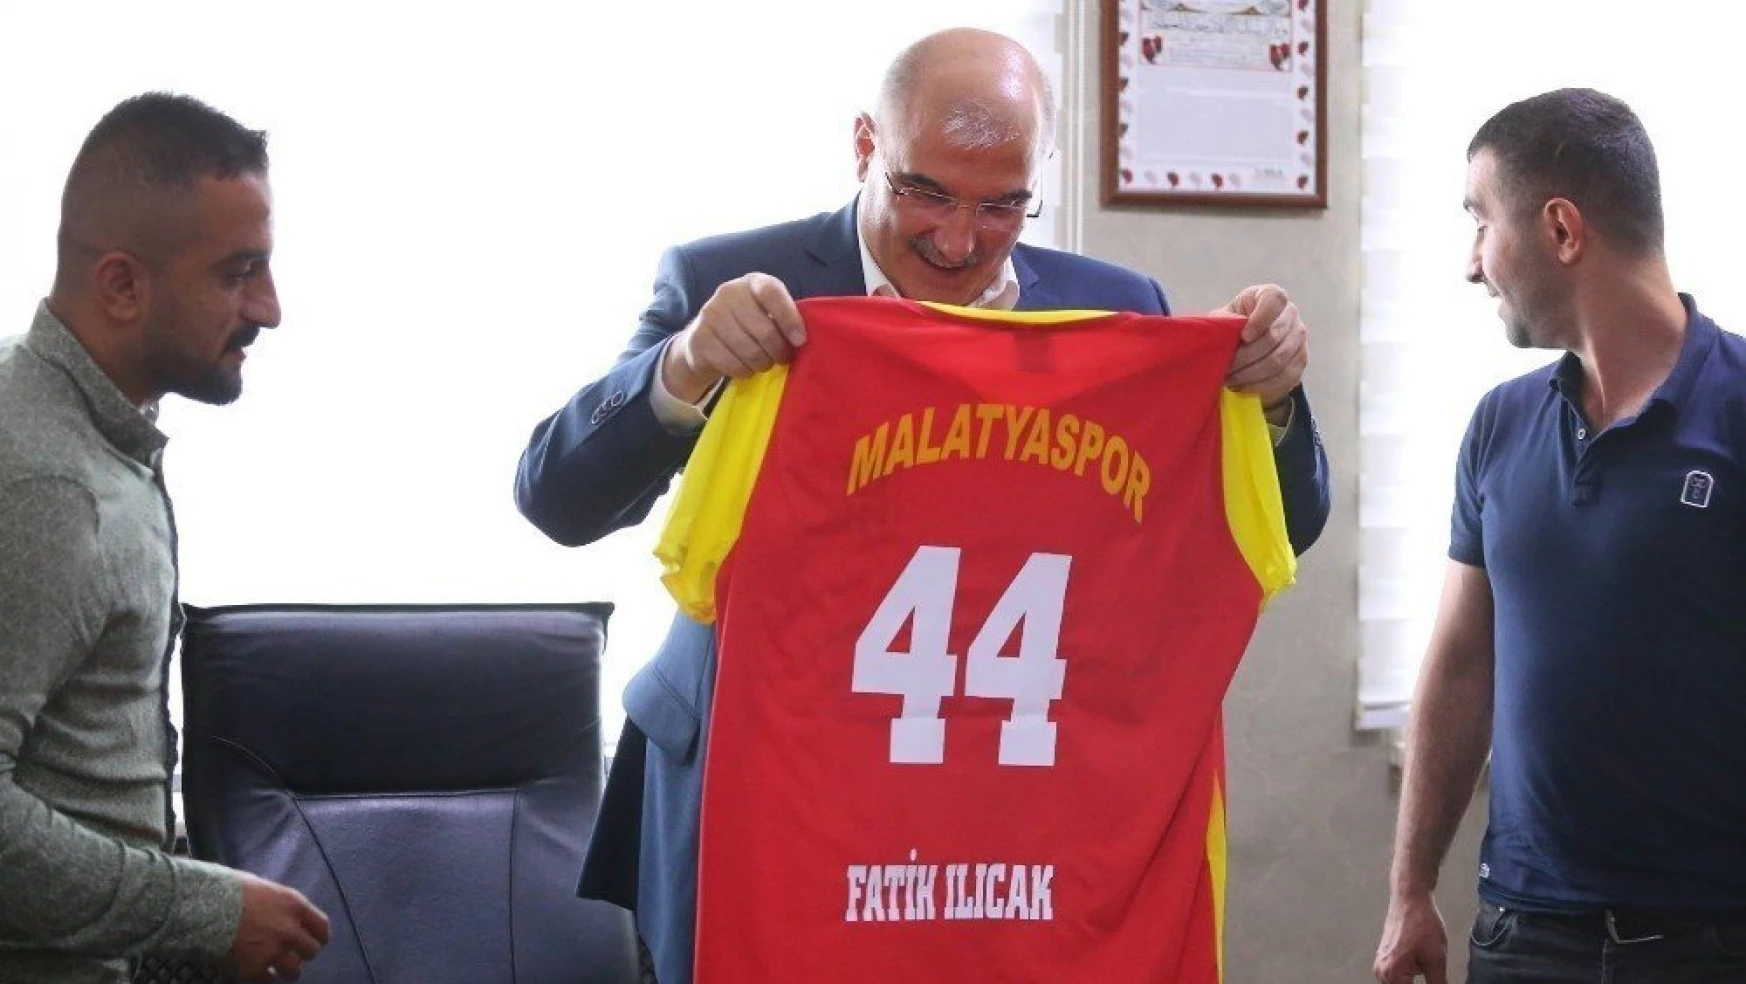 Taraftarlar Derneği'nden iş adamı Ilıcak'a Malatyaspor forması
